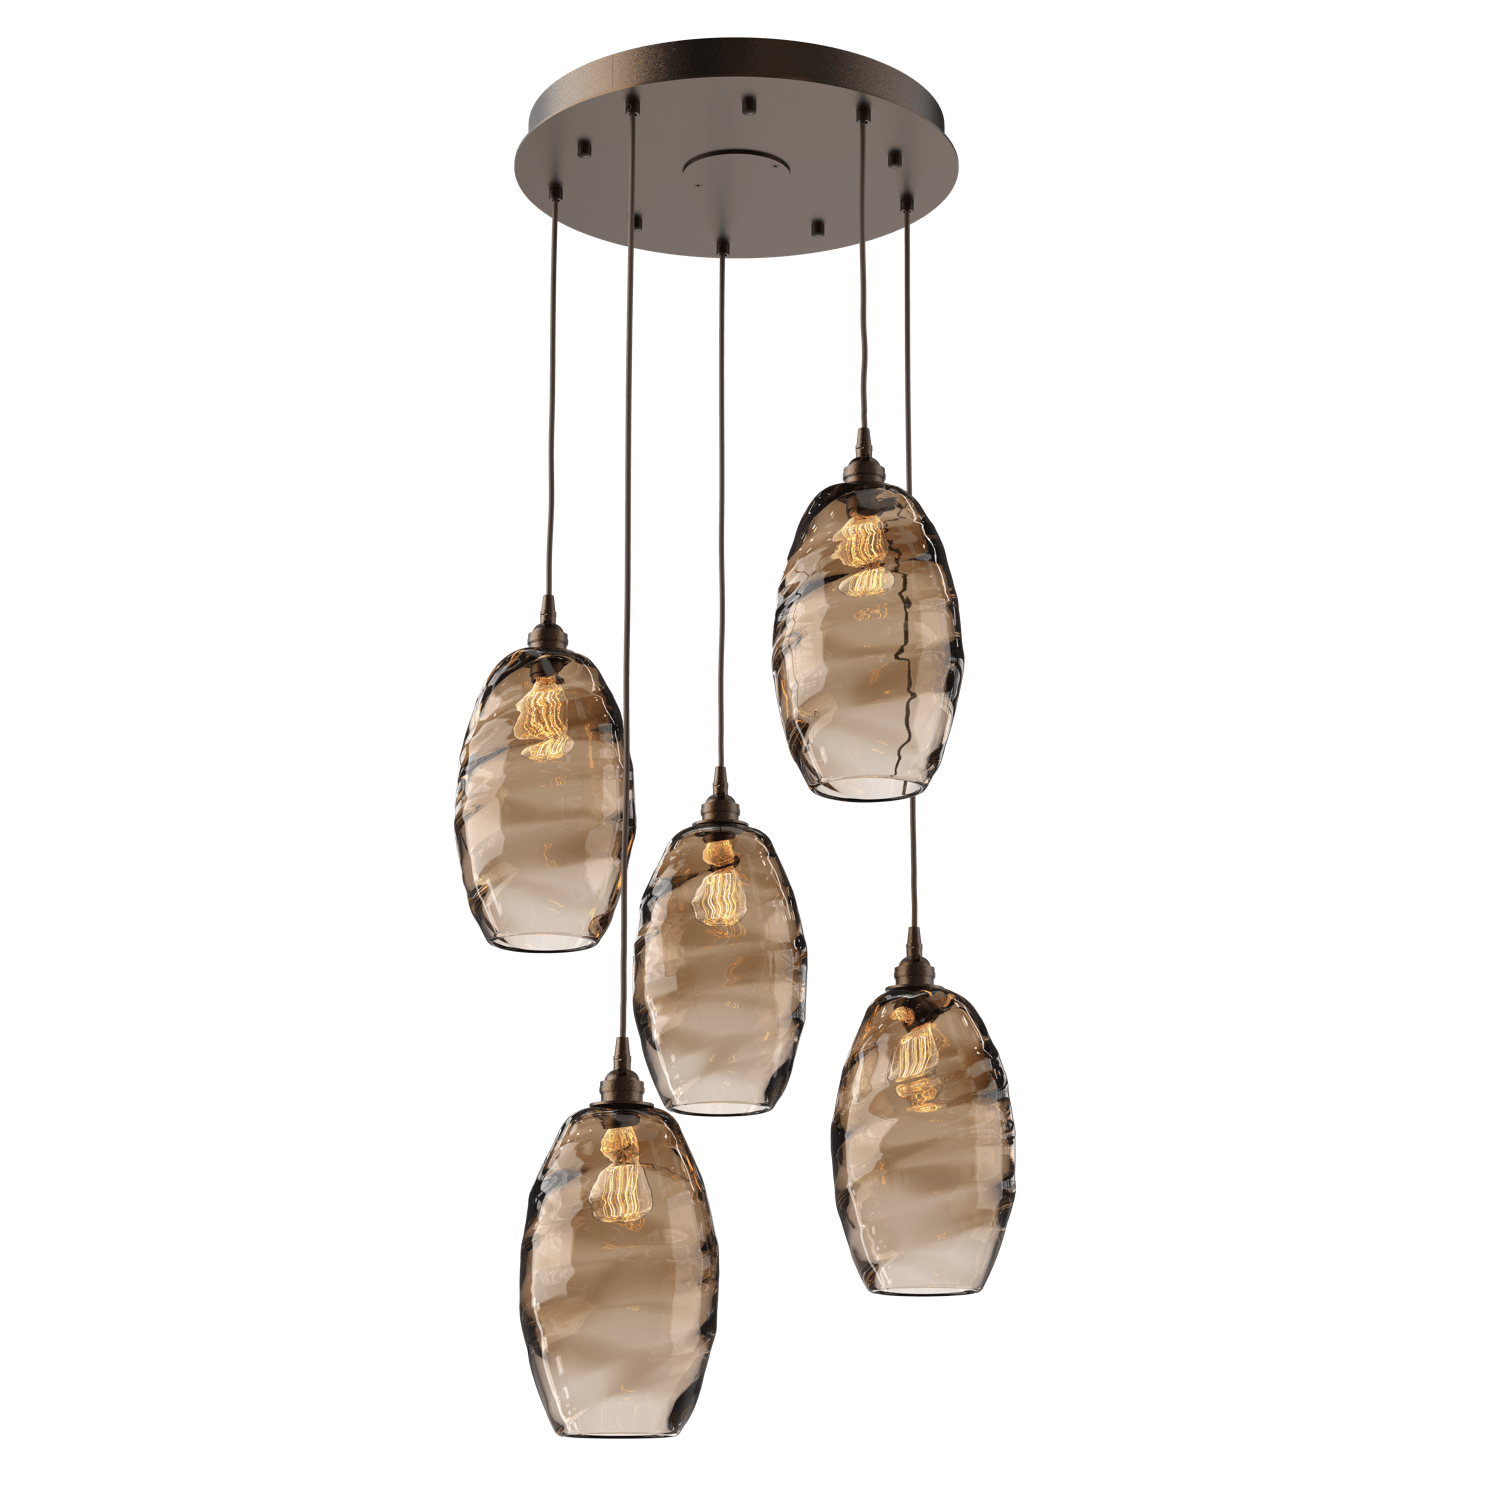 CHB0035-05-FB-OB-Hammerton-Studio-Optic-Blown-Glass-Elisse-5-light-round-pendant-chandelier-with-flat-bronze-finish-and-optic-bronze-blown-glass-shades-and-incandescent-lamping